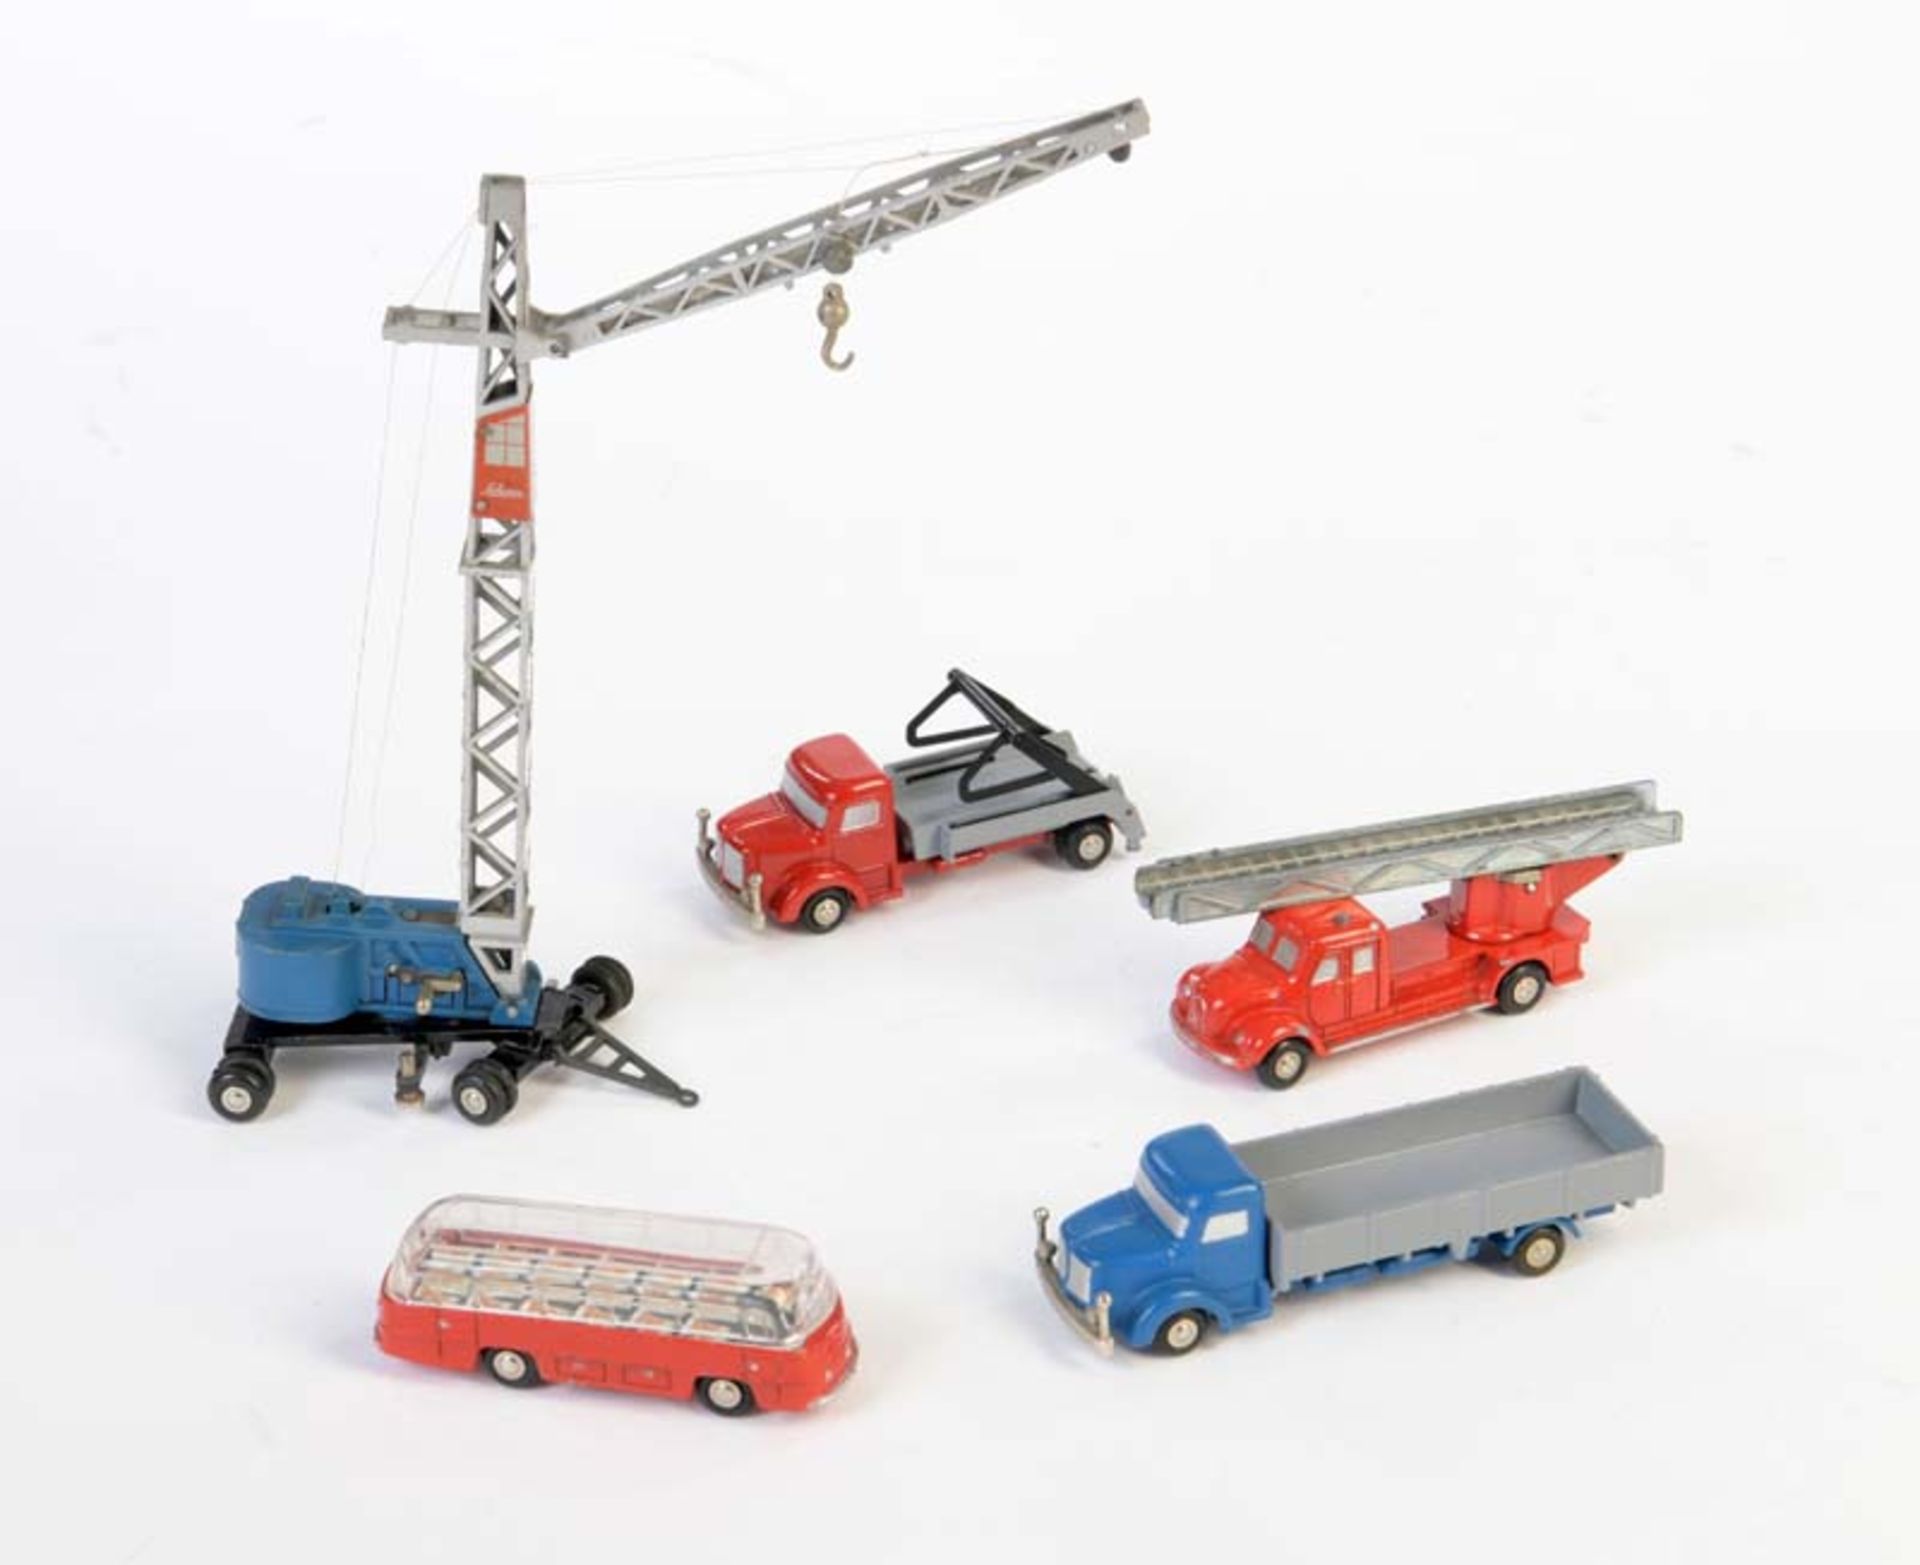 Schuco, 5x Piccolo (Kran, Krupp LKW, Mercedes, Bus u.a.), W.-Germany, Originale der 60er Jahre,